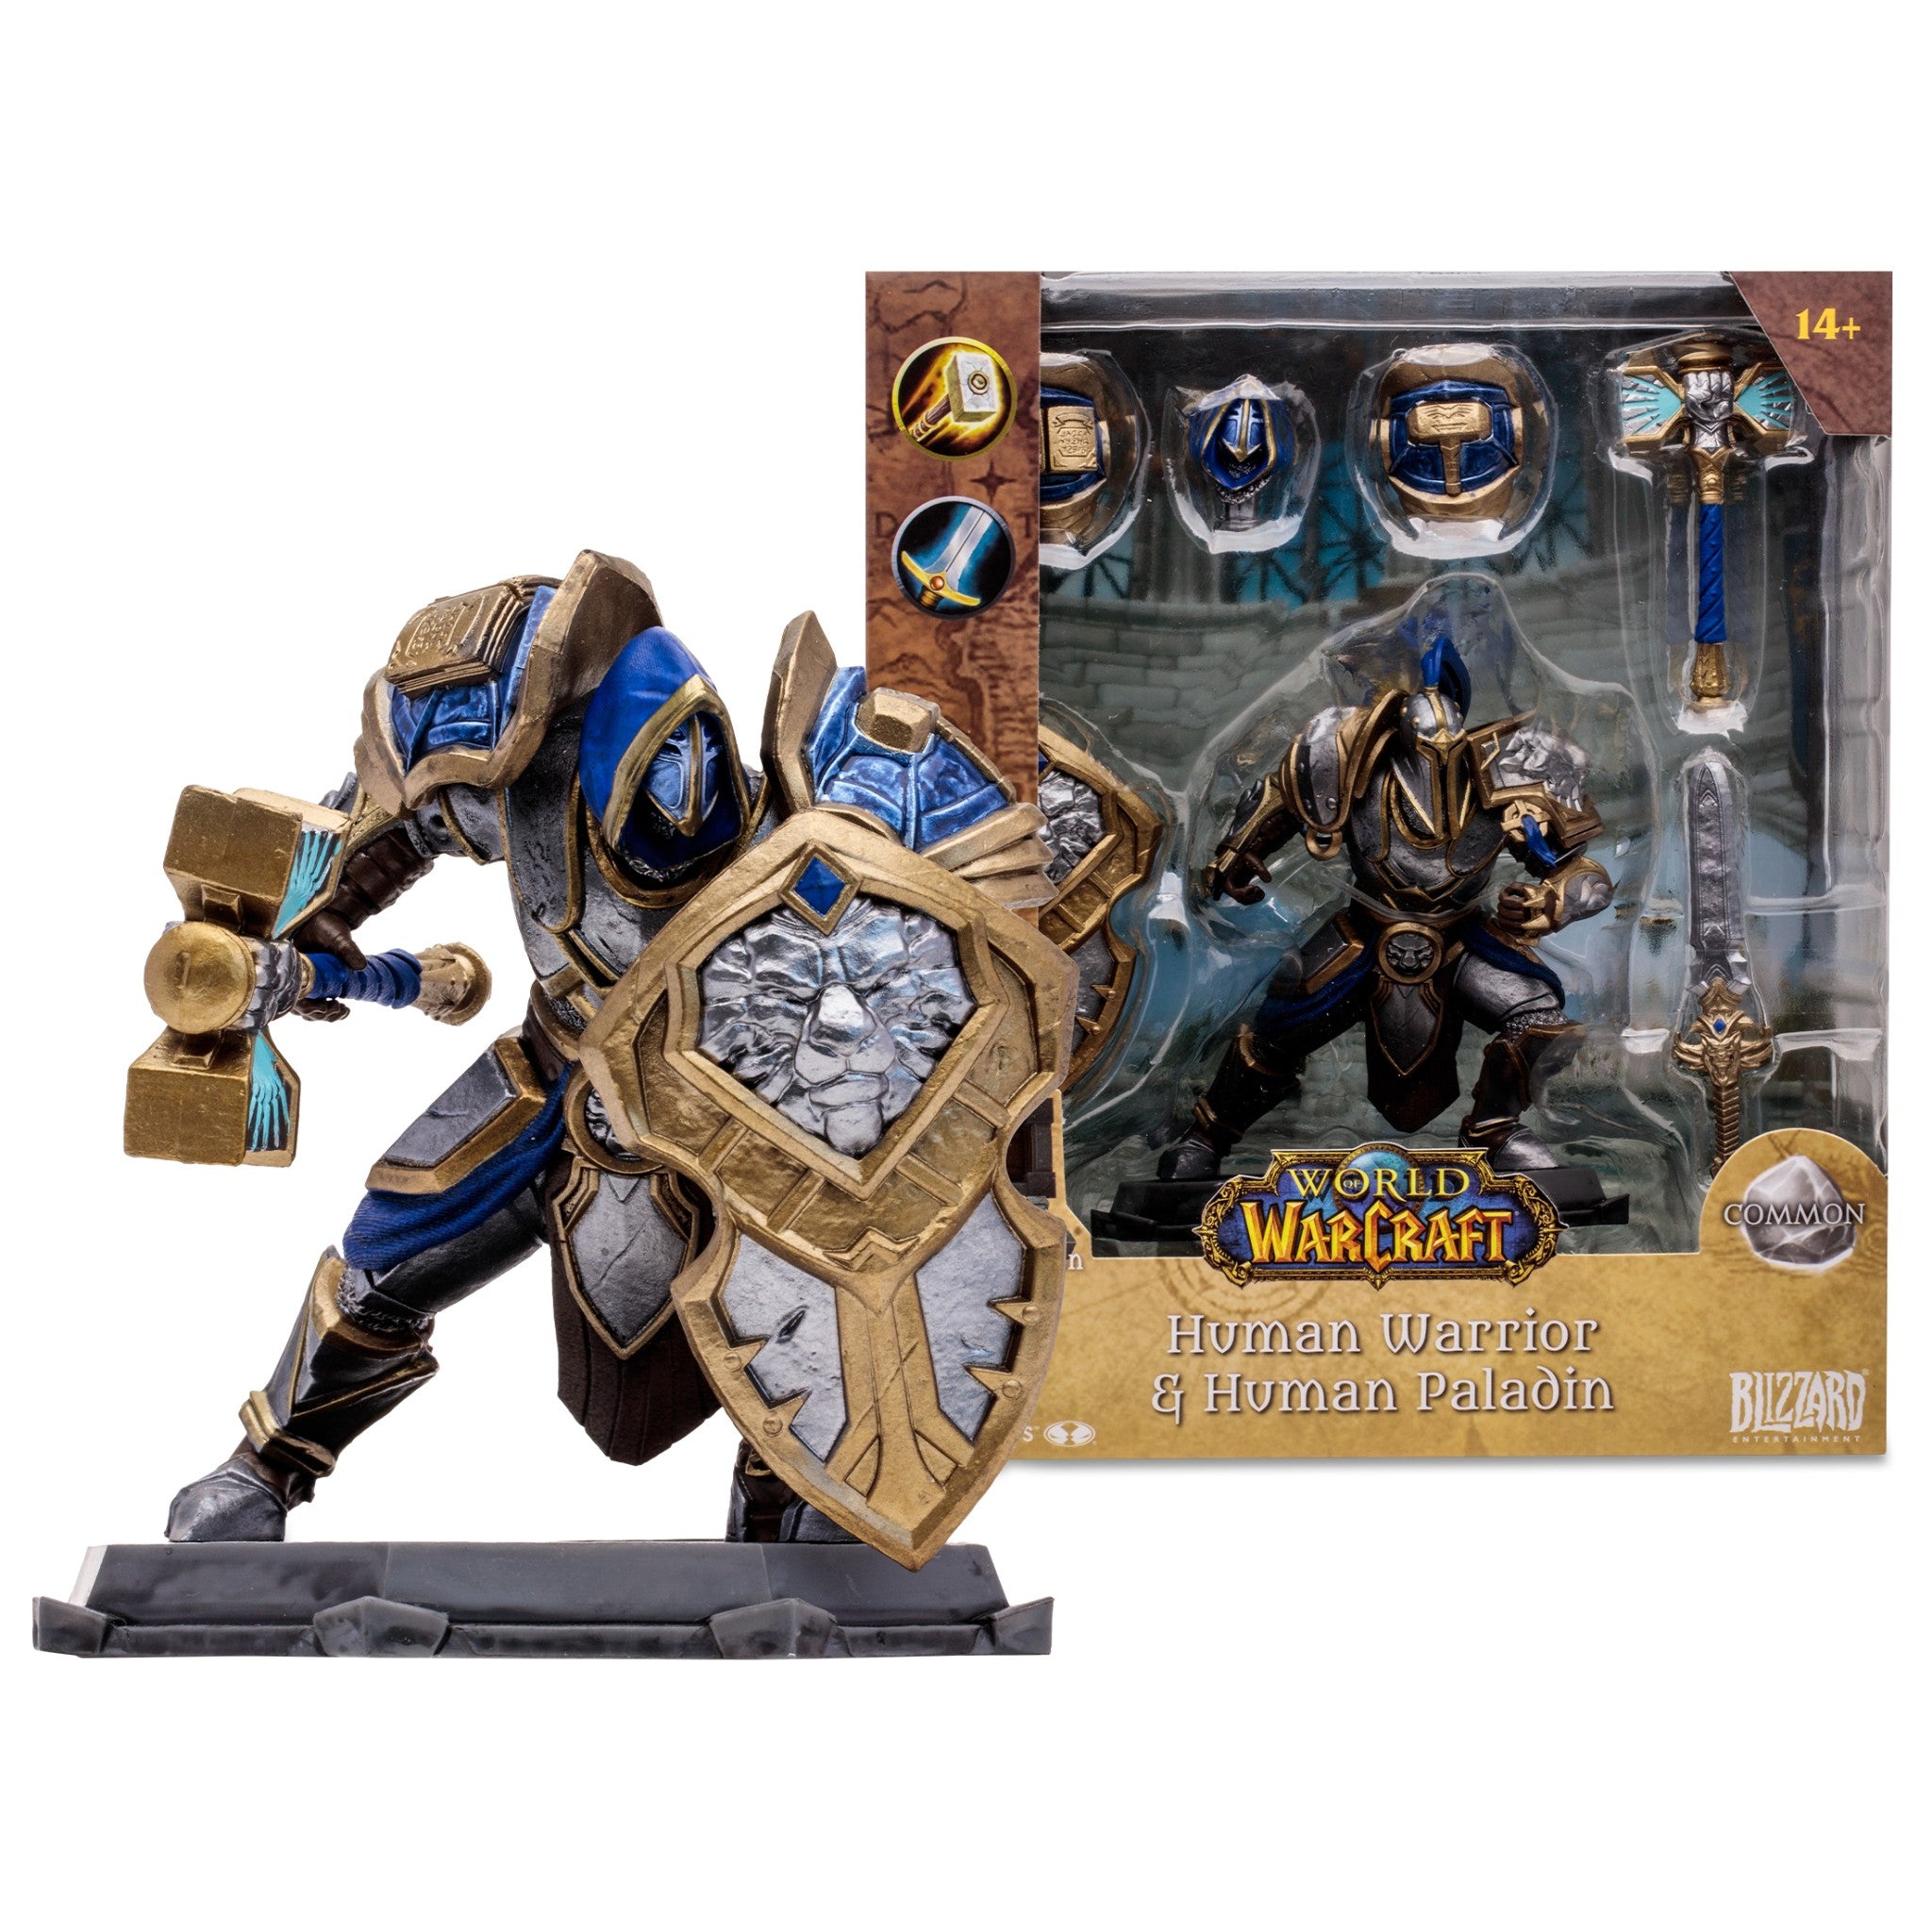 World of Warcraft Human Warrior Paladin 7" Common Figure - McFarlane Toys